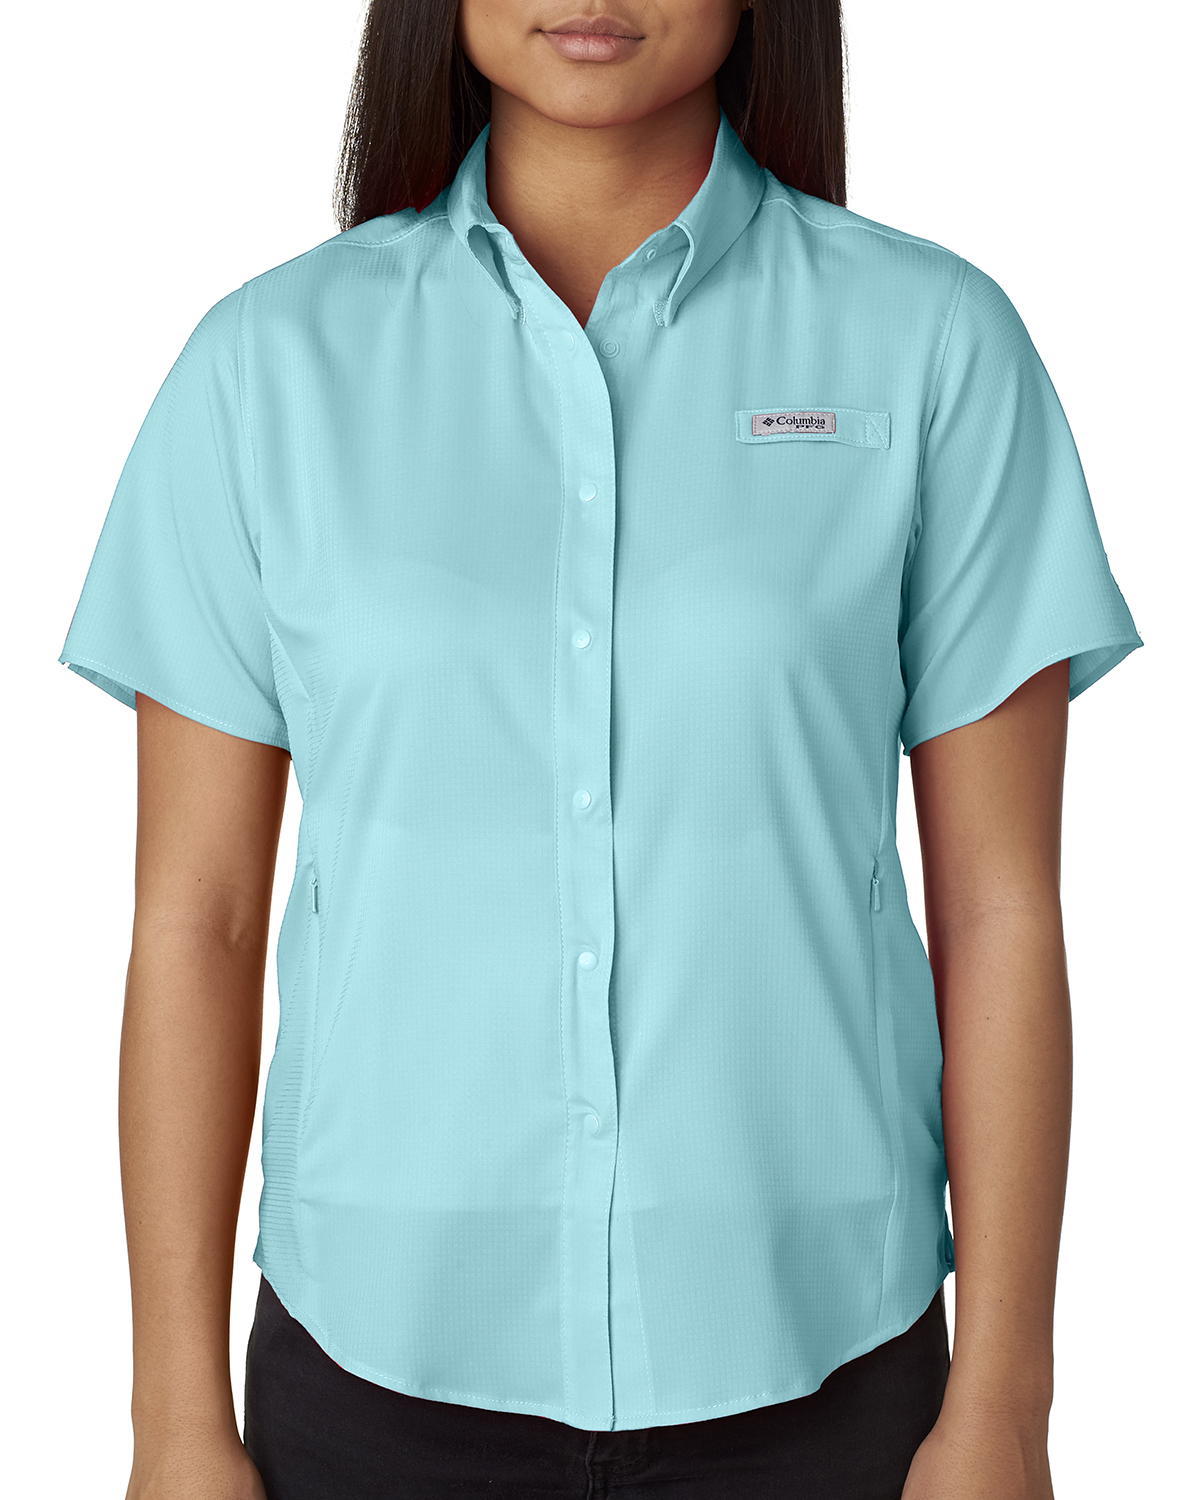 XS NEW Columbia Women’s Tamiami II Short Sleeve Shirt S-M-L-XL 